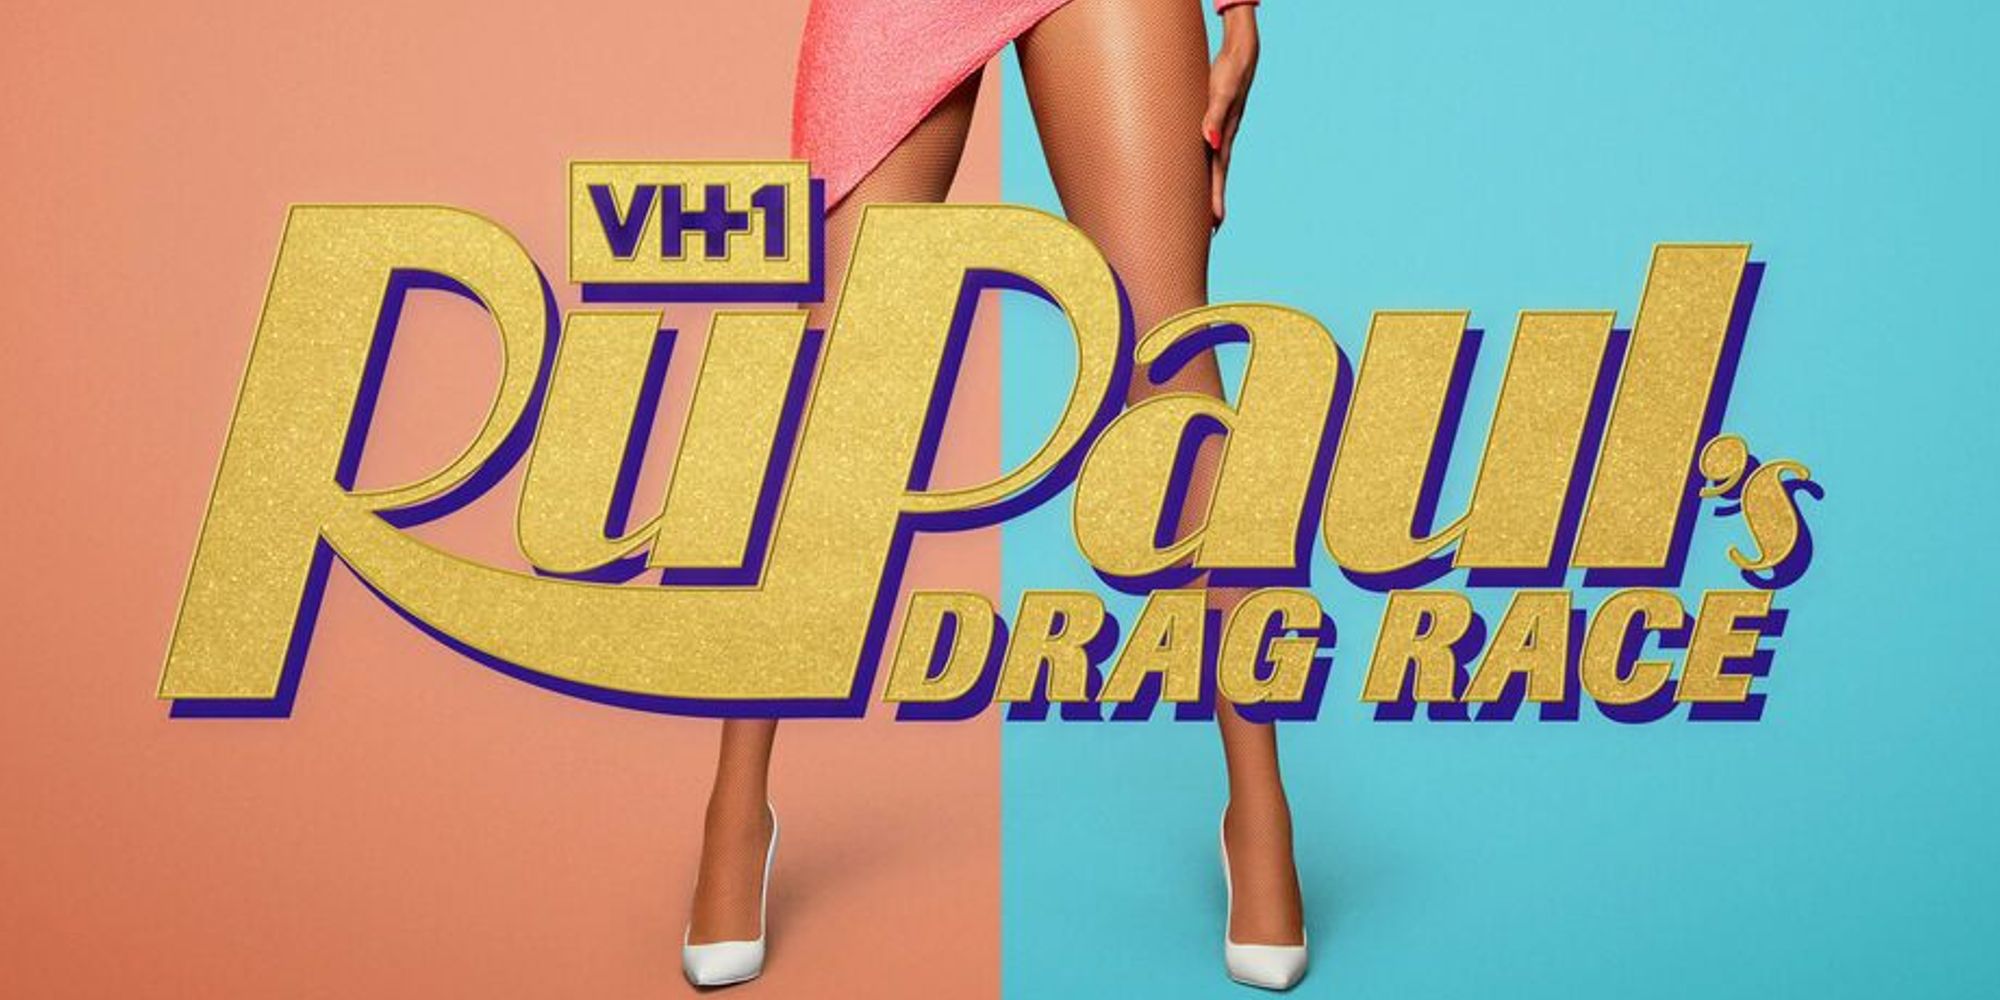 RuPauls-Drag-Race-season-14-poster.jpg